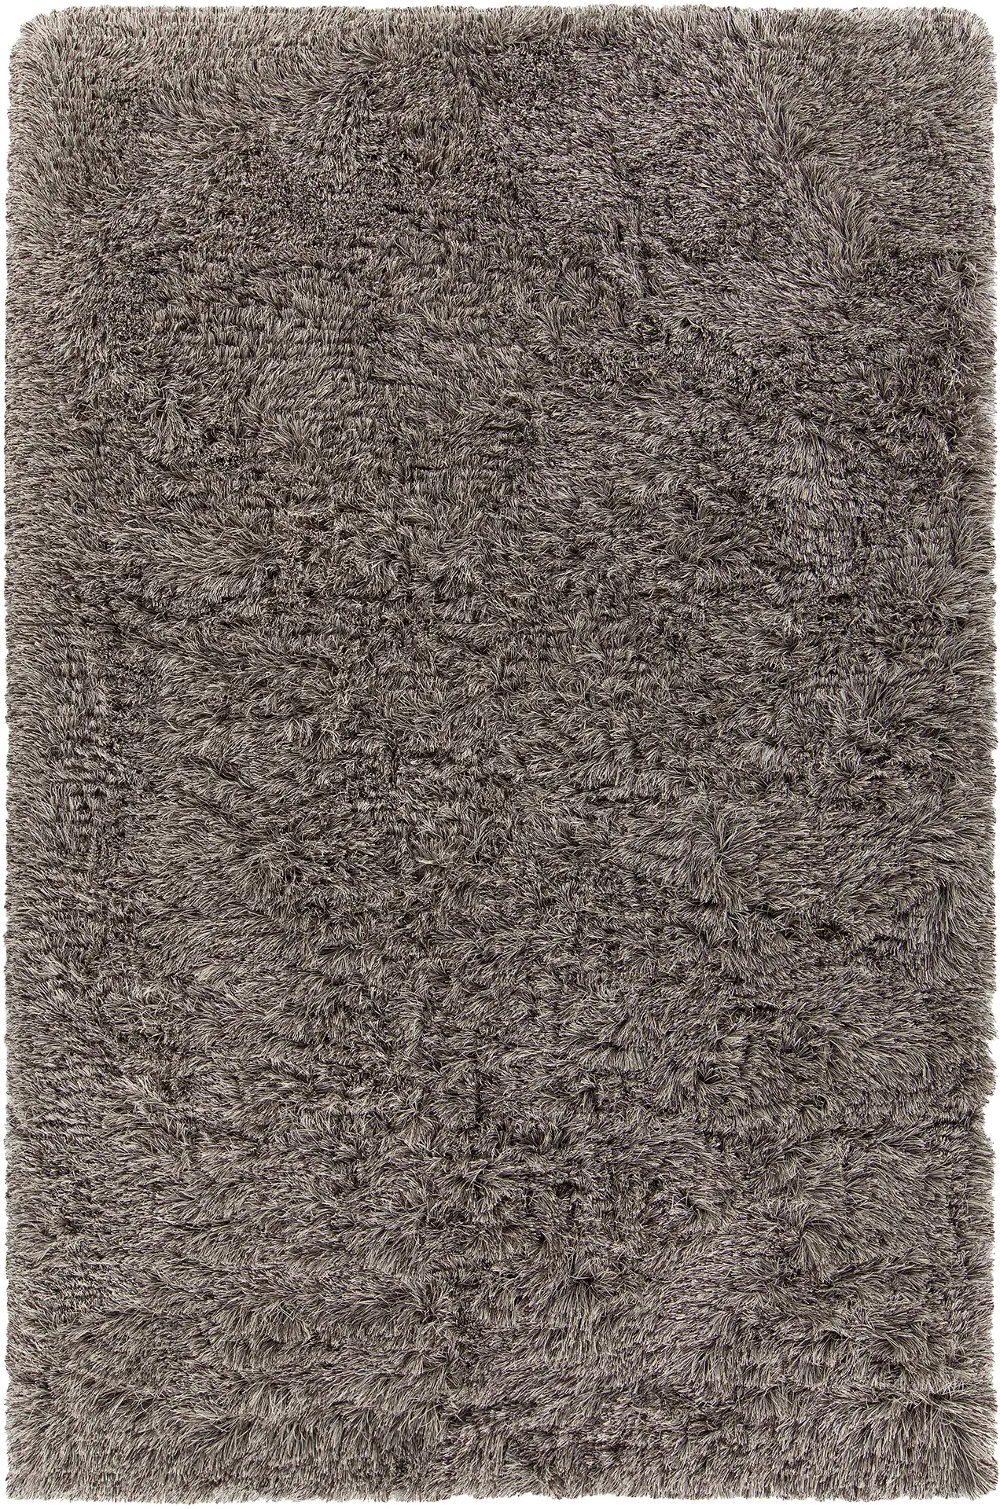 5 x 8 Medium Contemporary Gray Shag Rug - Elisha-1